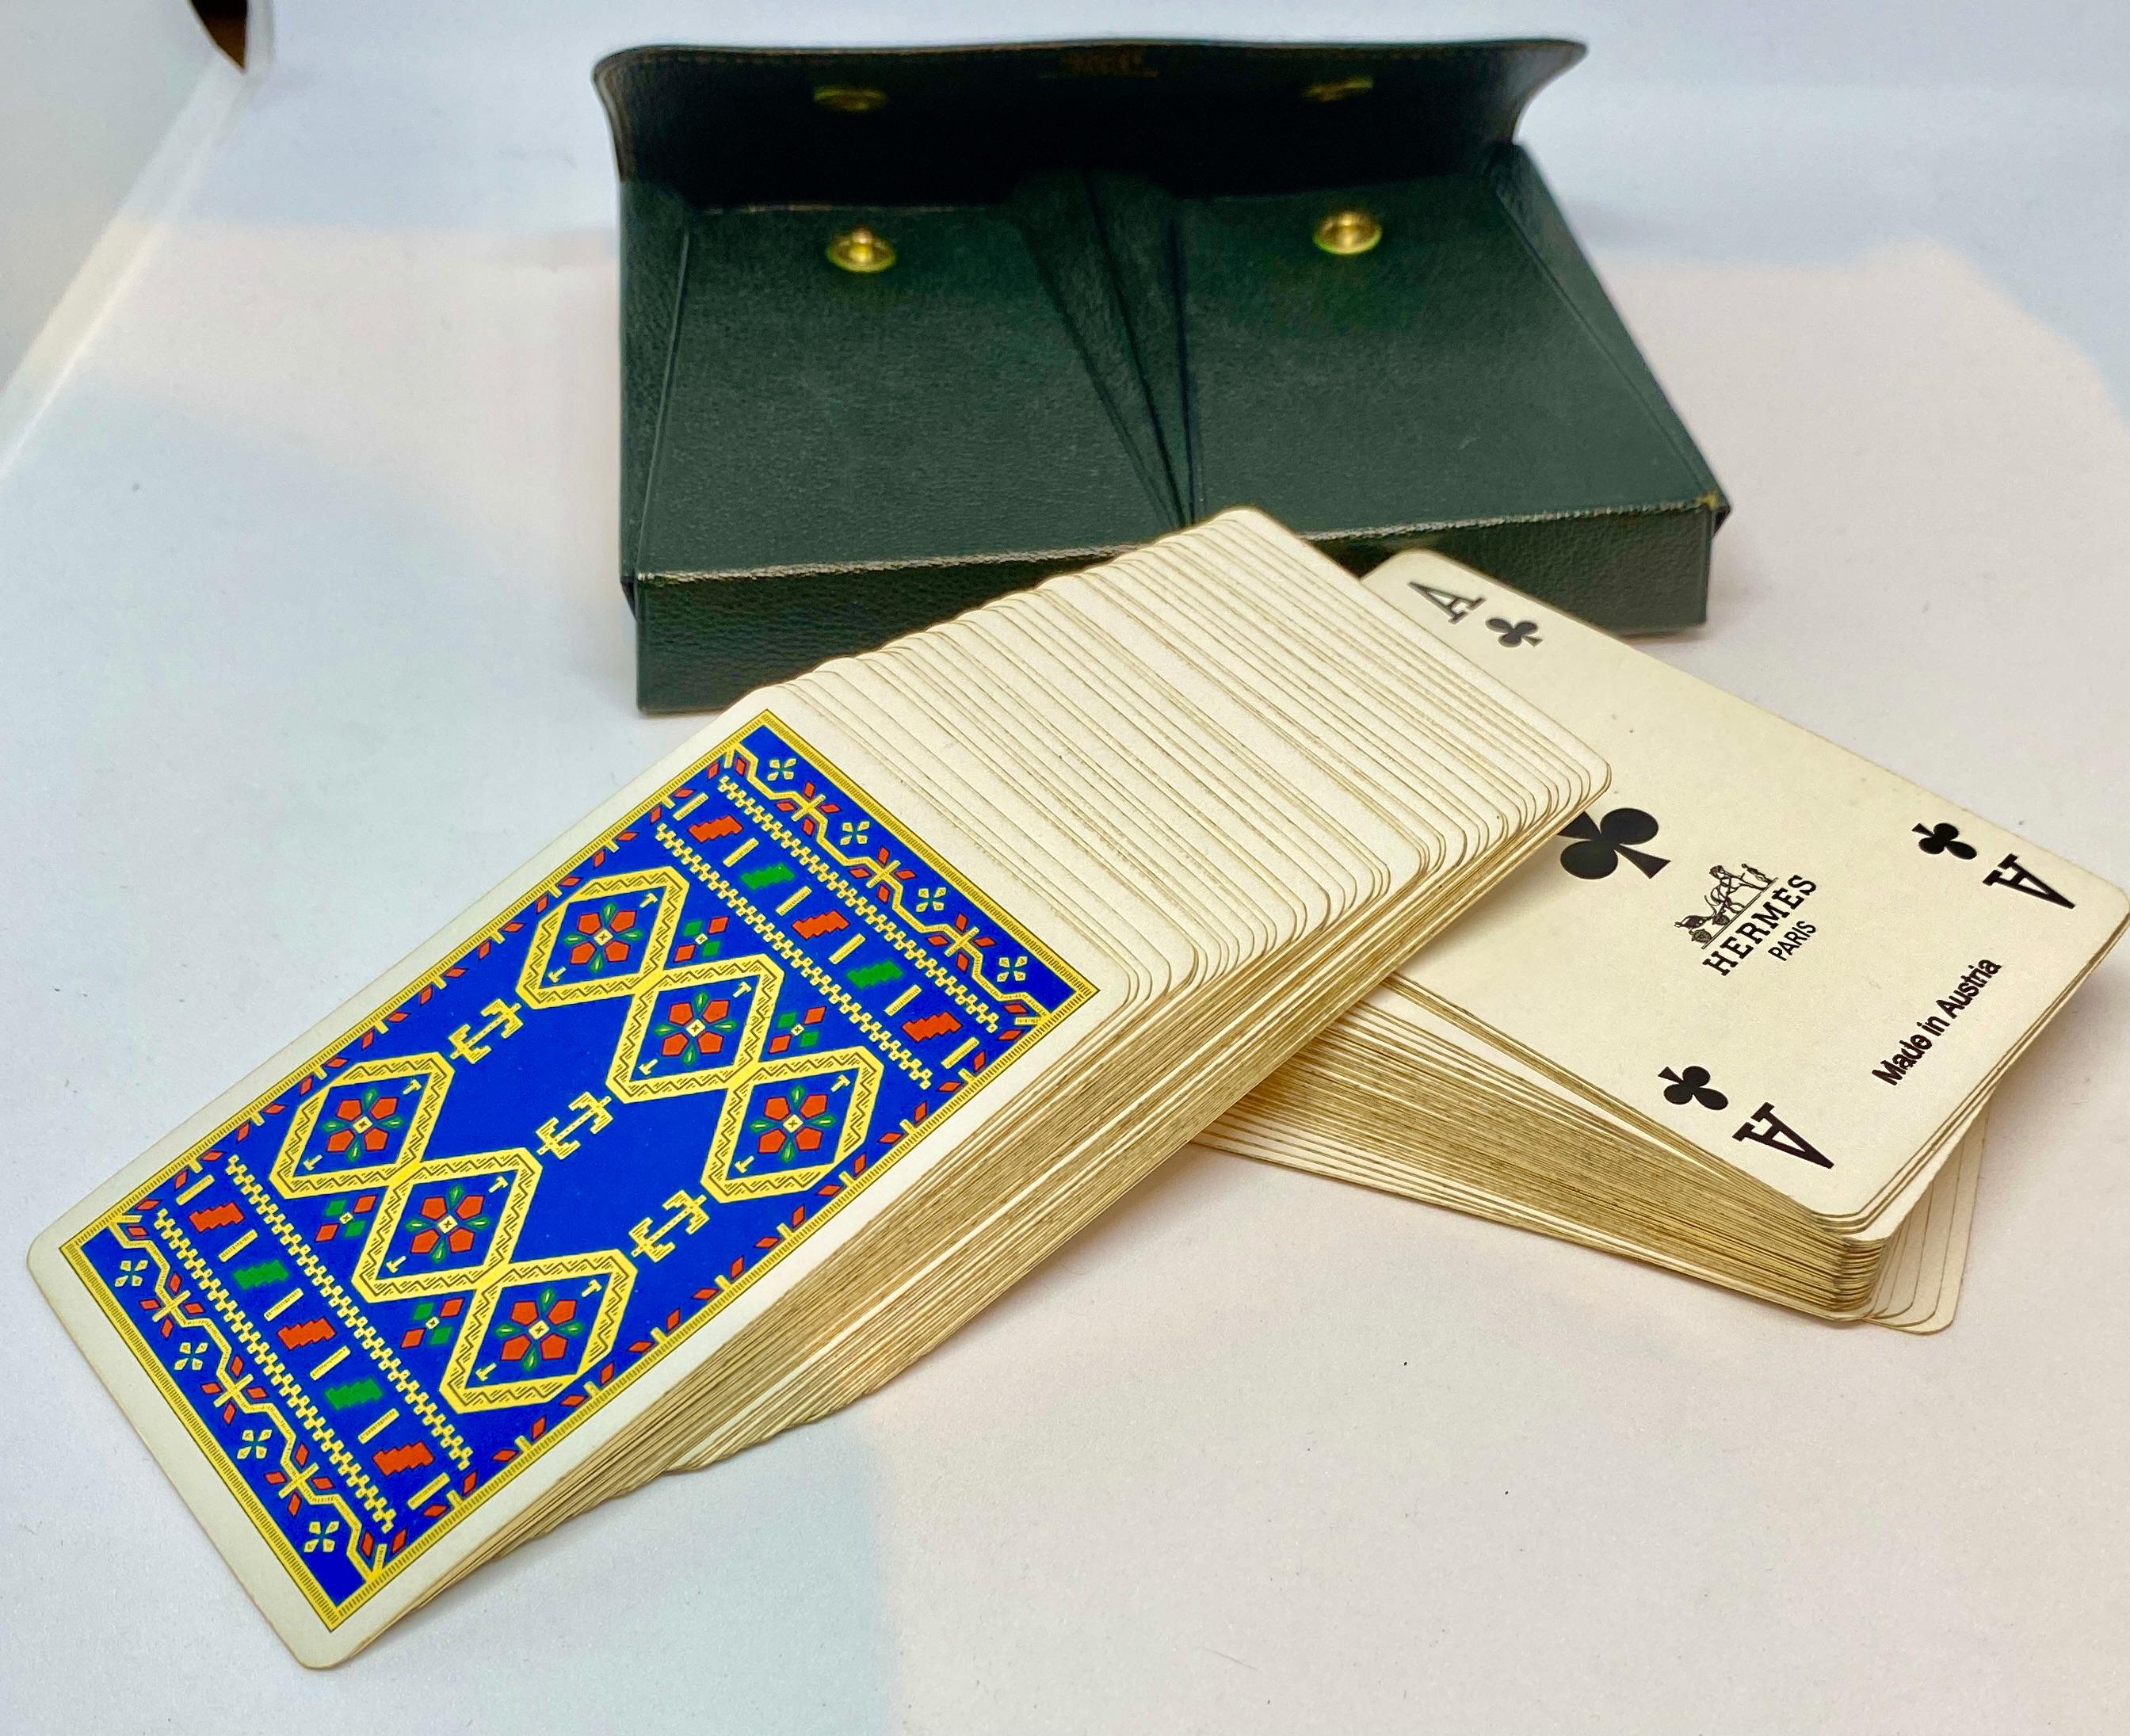 Hermès Bridge Set Playing Cards in Green Leather Case 2